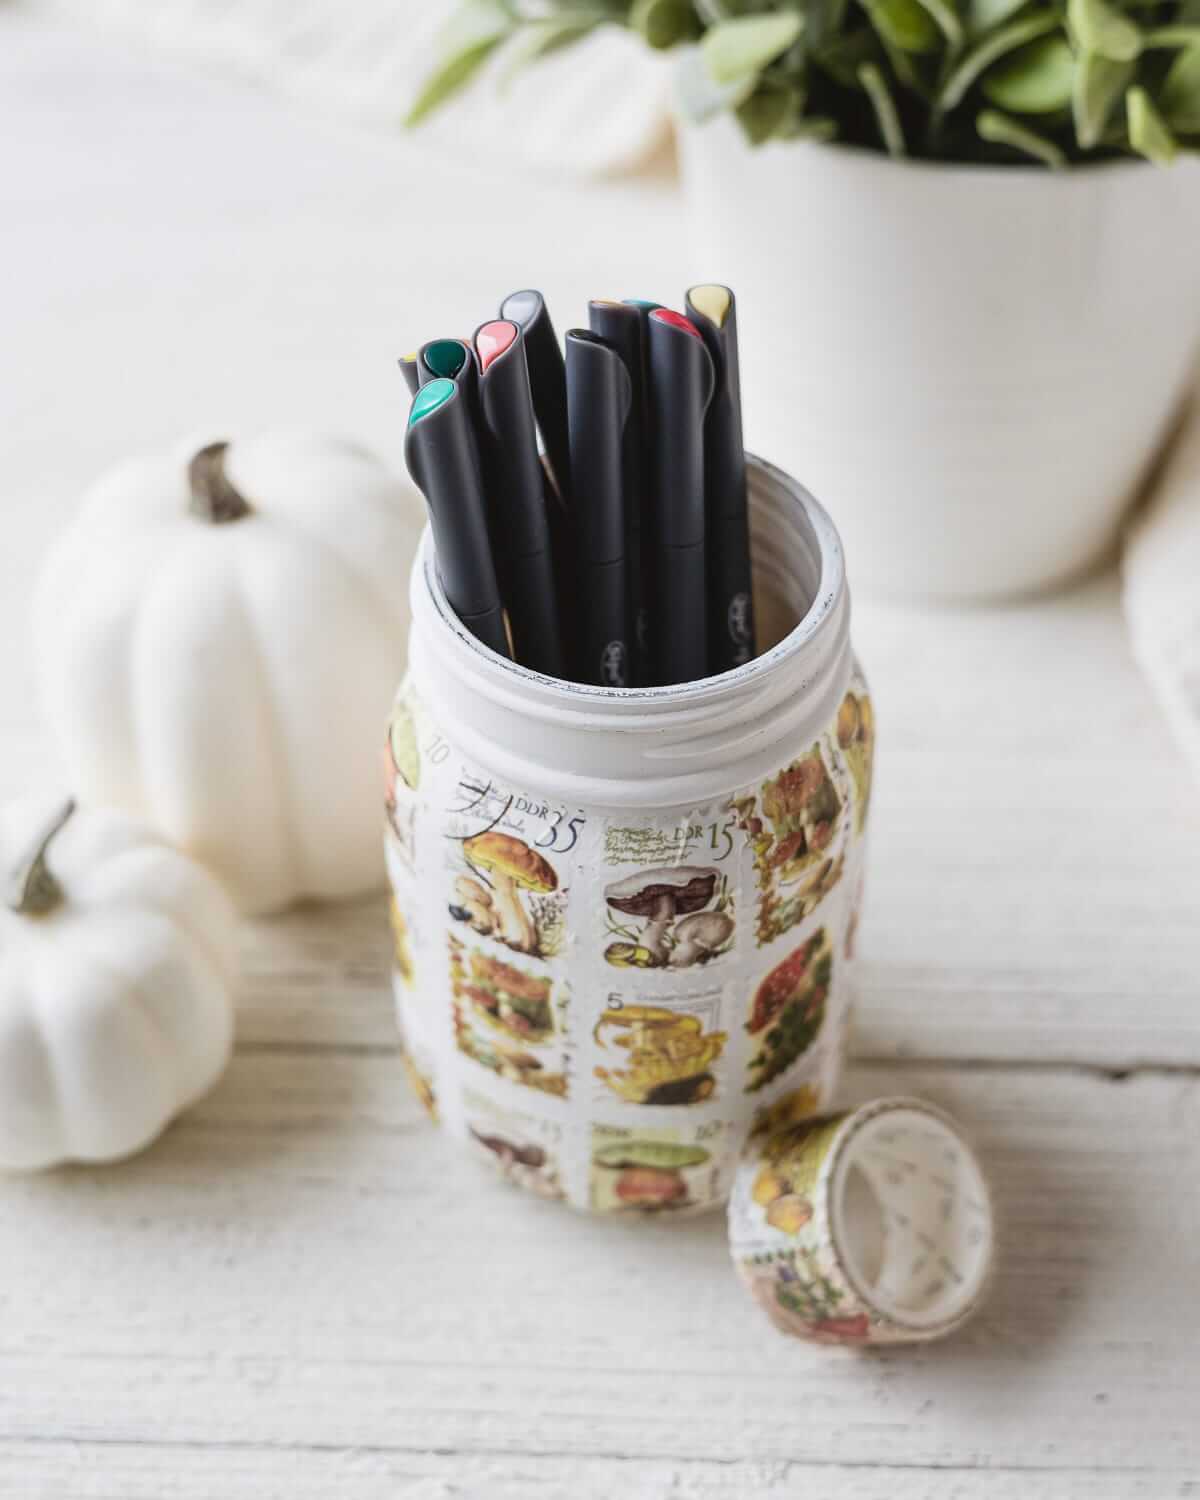 DIY Mason Jar Decorated With Washi Tape Pencil Holder Idea Decorative Mason Jar Washi Tape Crafts